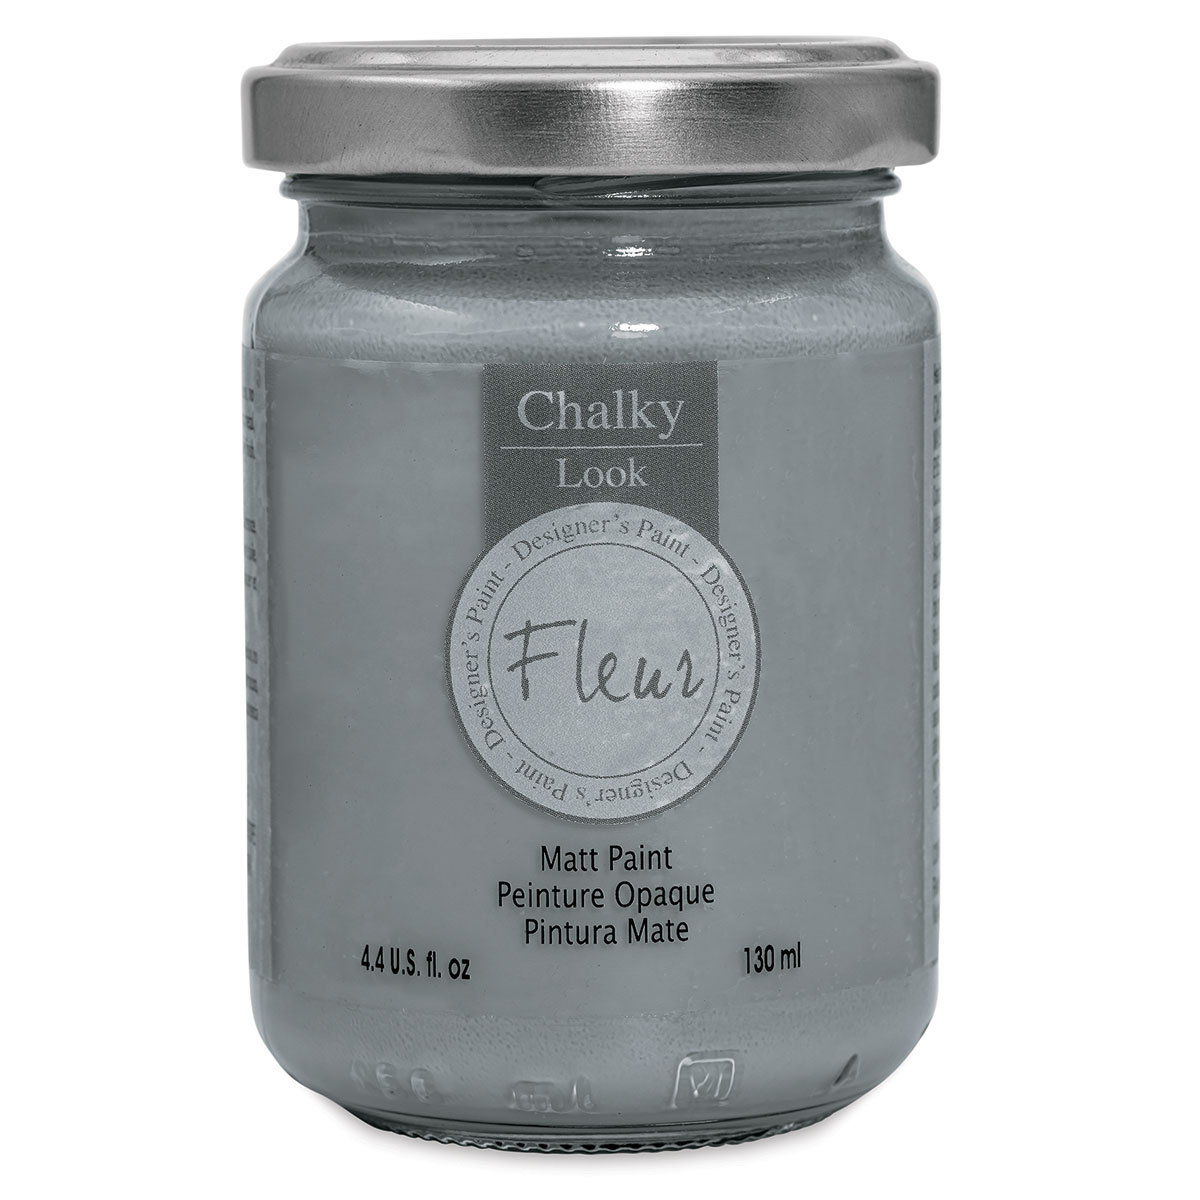 Fleur Chalky Look Paint - Smoky, 4.4 oz jar